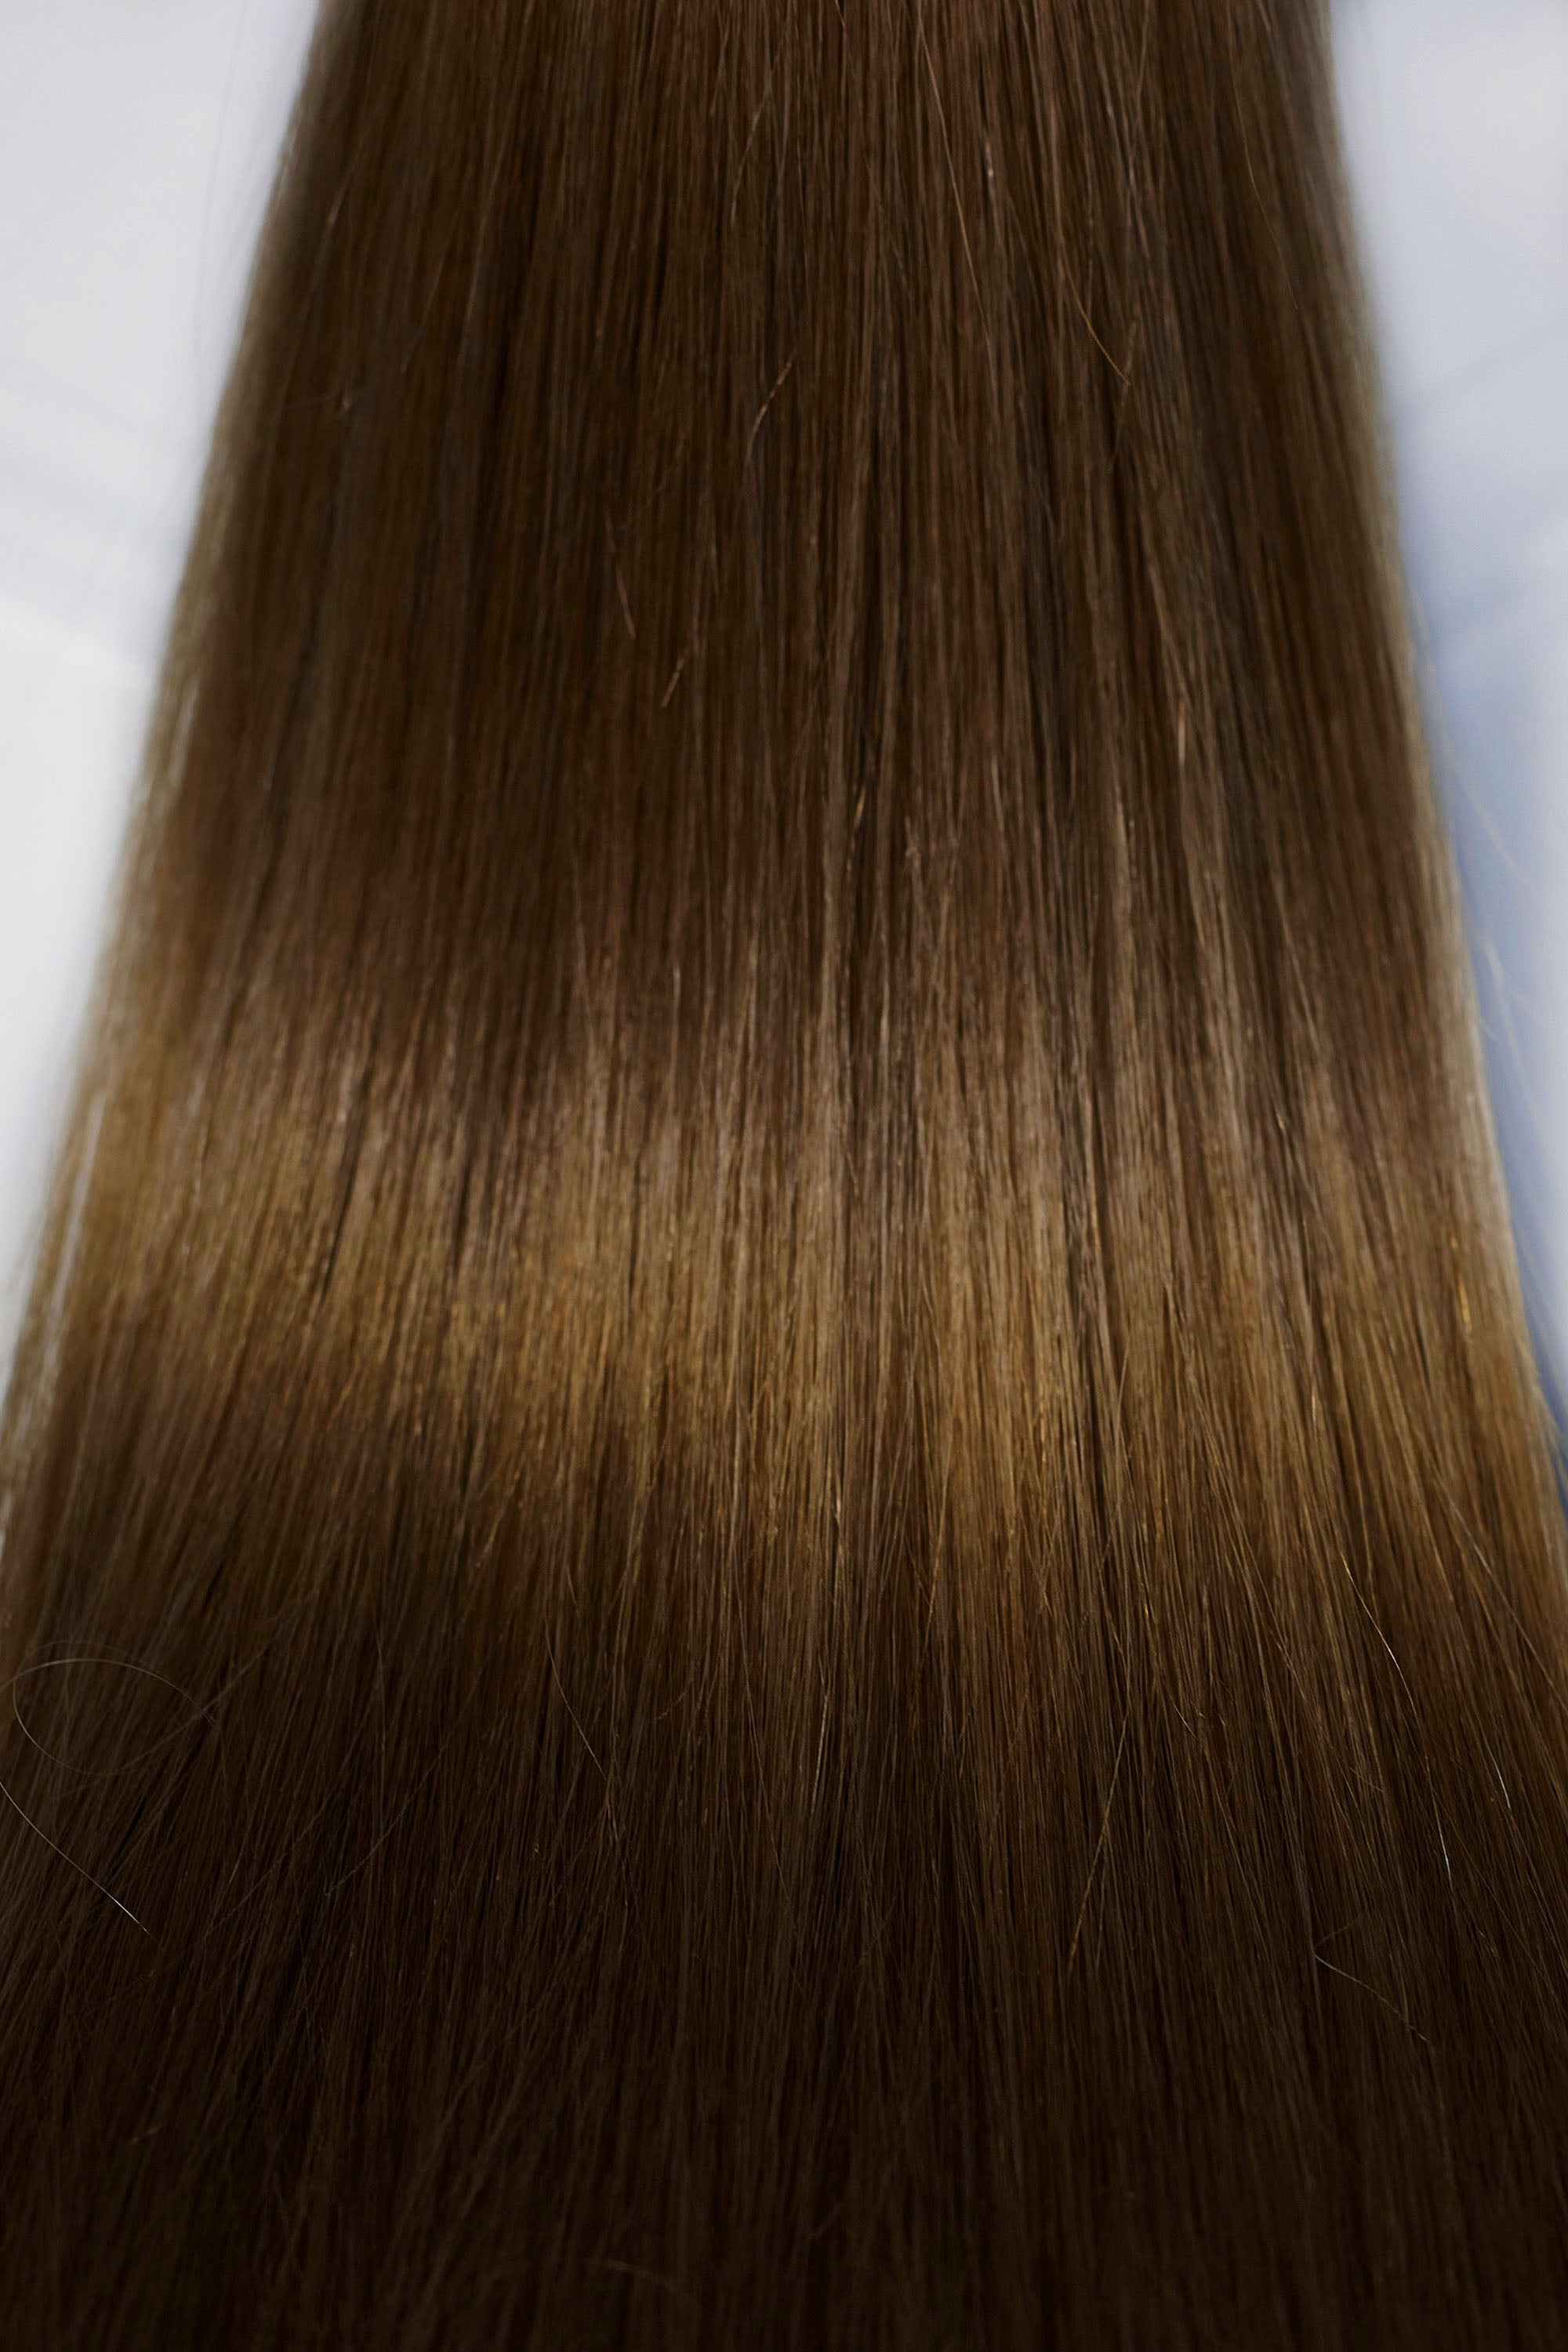 Behair professional Keratin Tip "Premium" 18" (45cm) Natural Straight Honey Walnut Brown #5 - 25g (1g each pcs) hair extensions